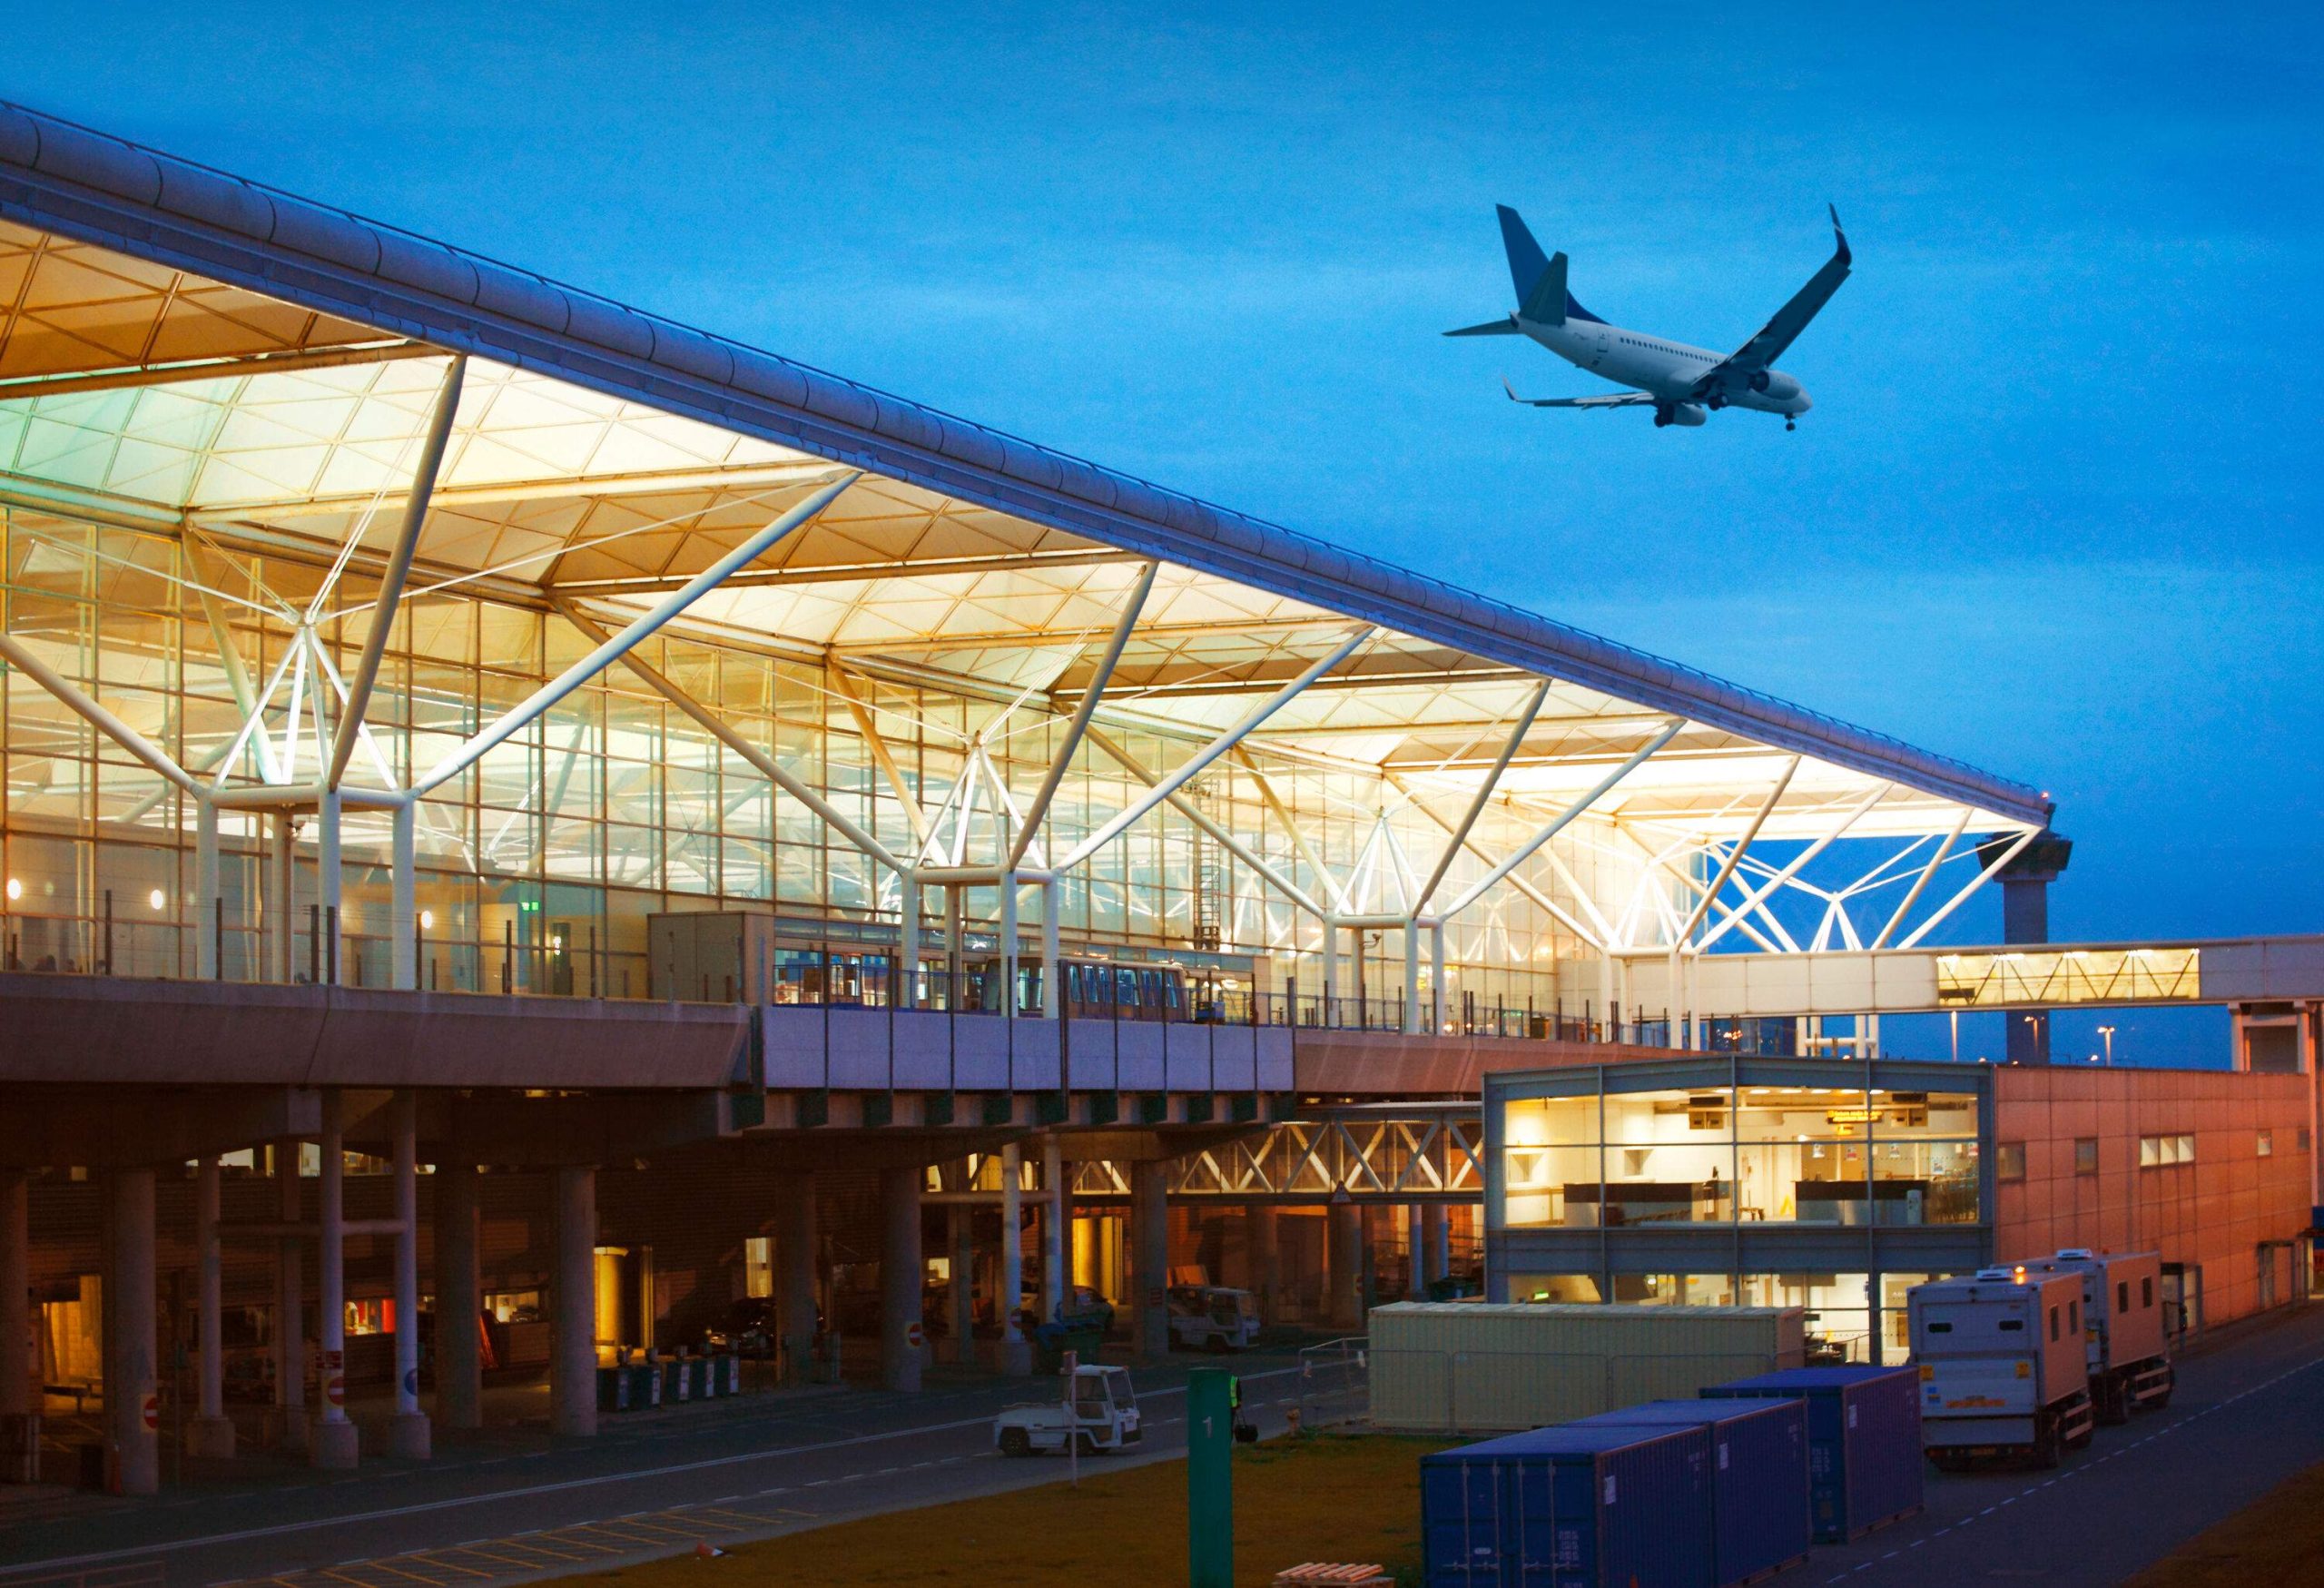 An aircraft flying above an airport terminal.